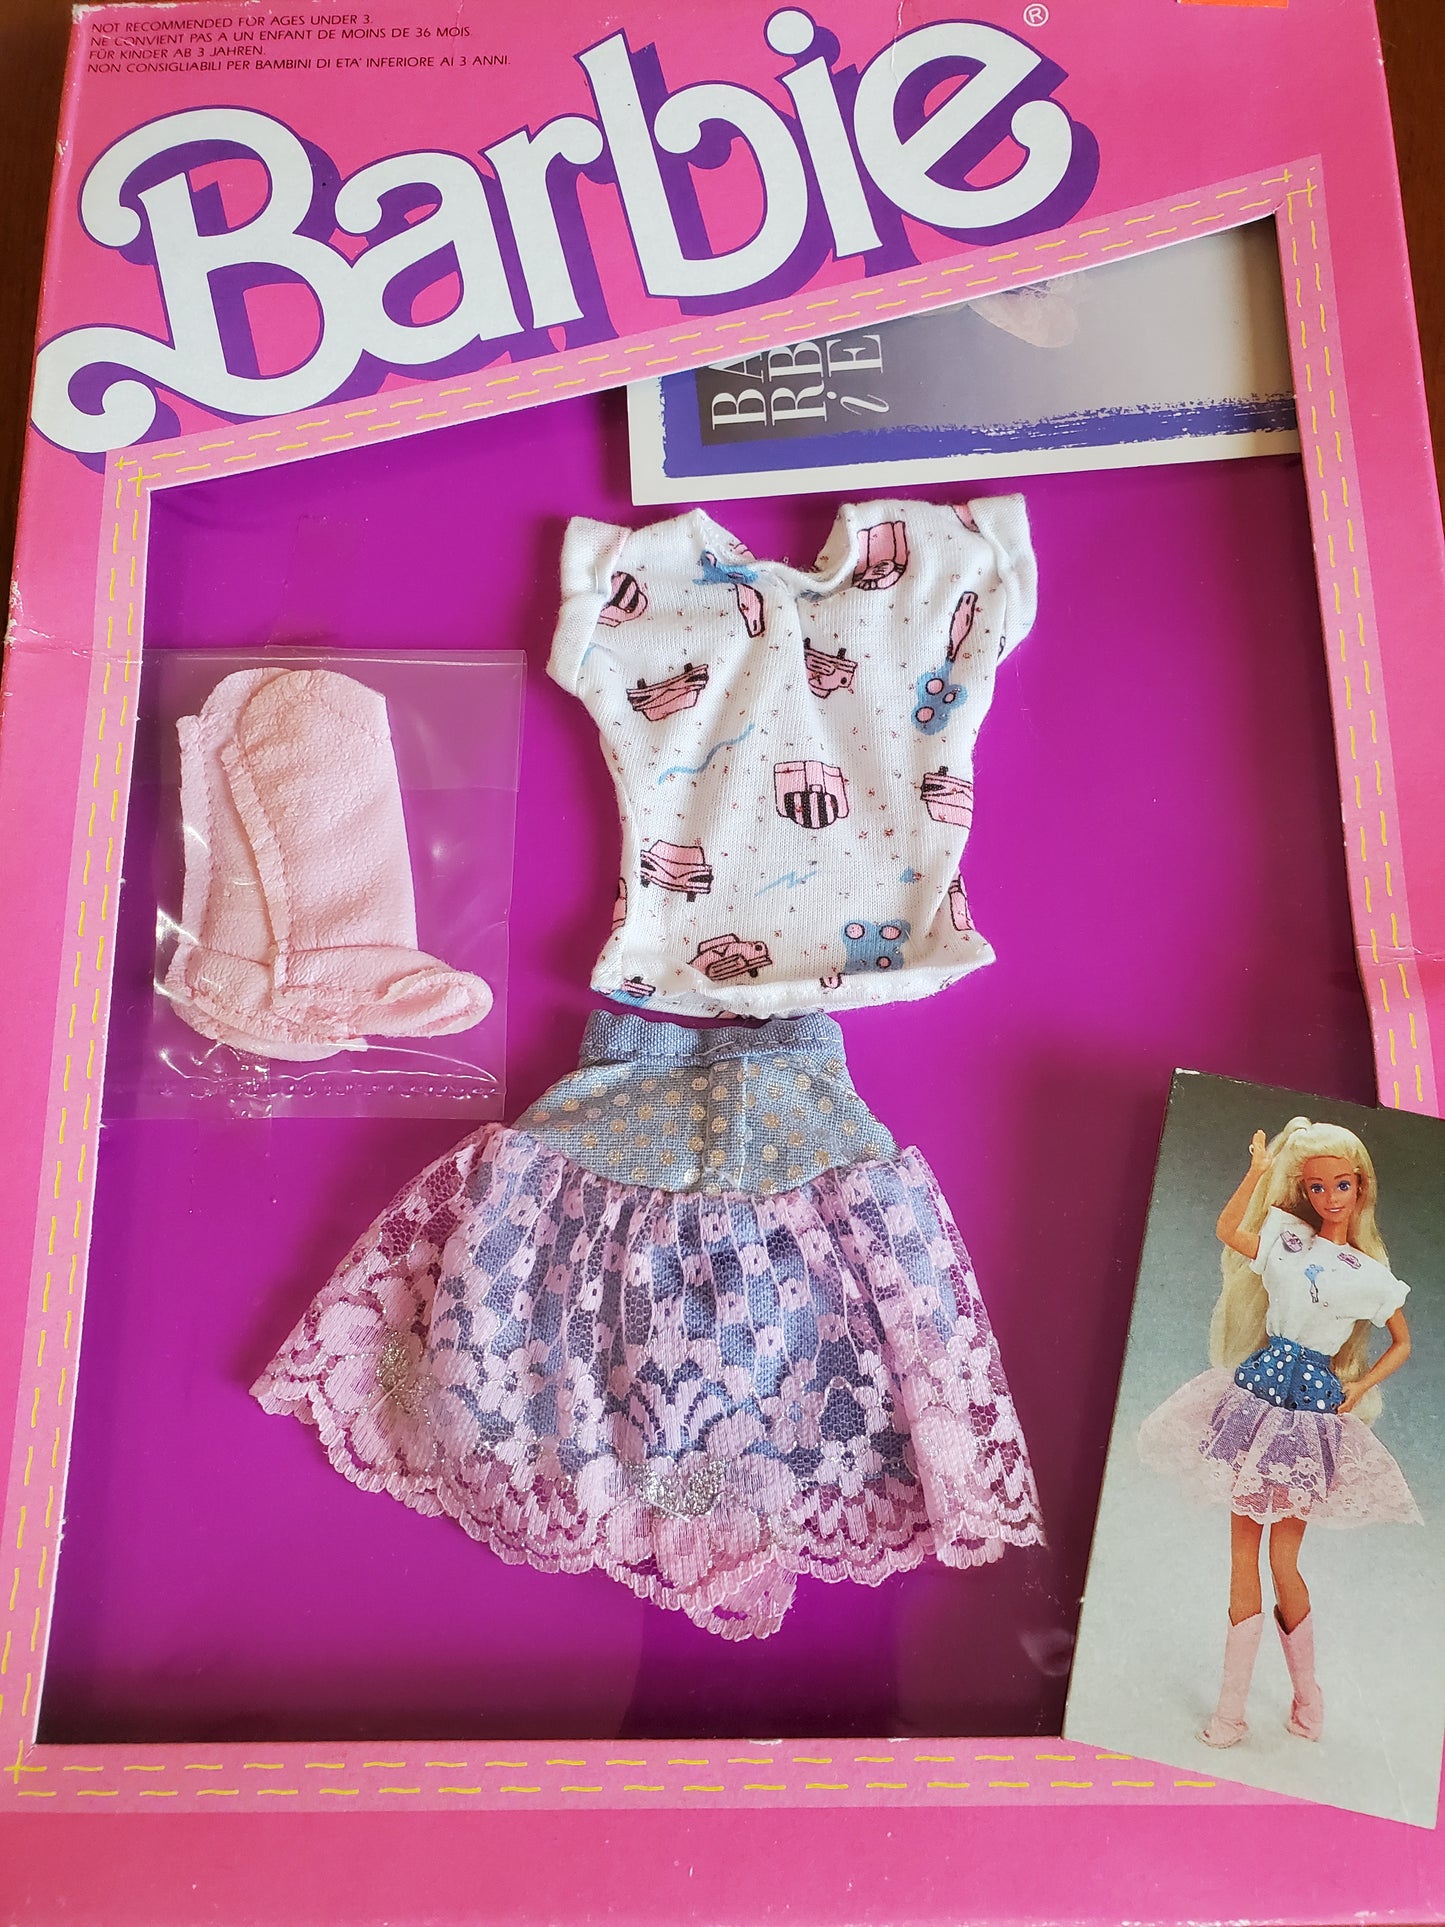 Jeans - Barbie  Fashion - skirt #4330 - Mint on card - 1987